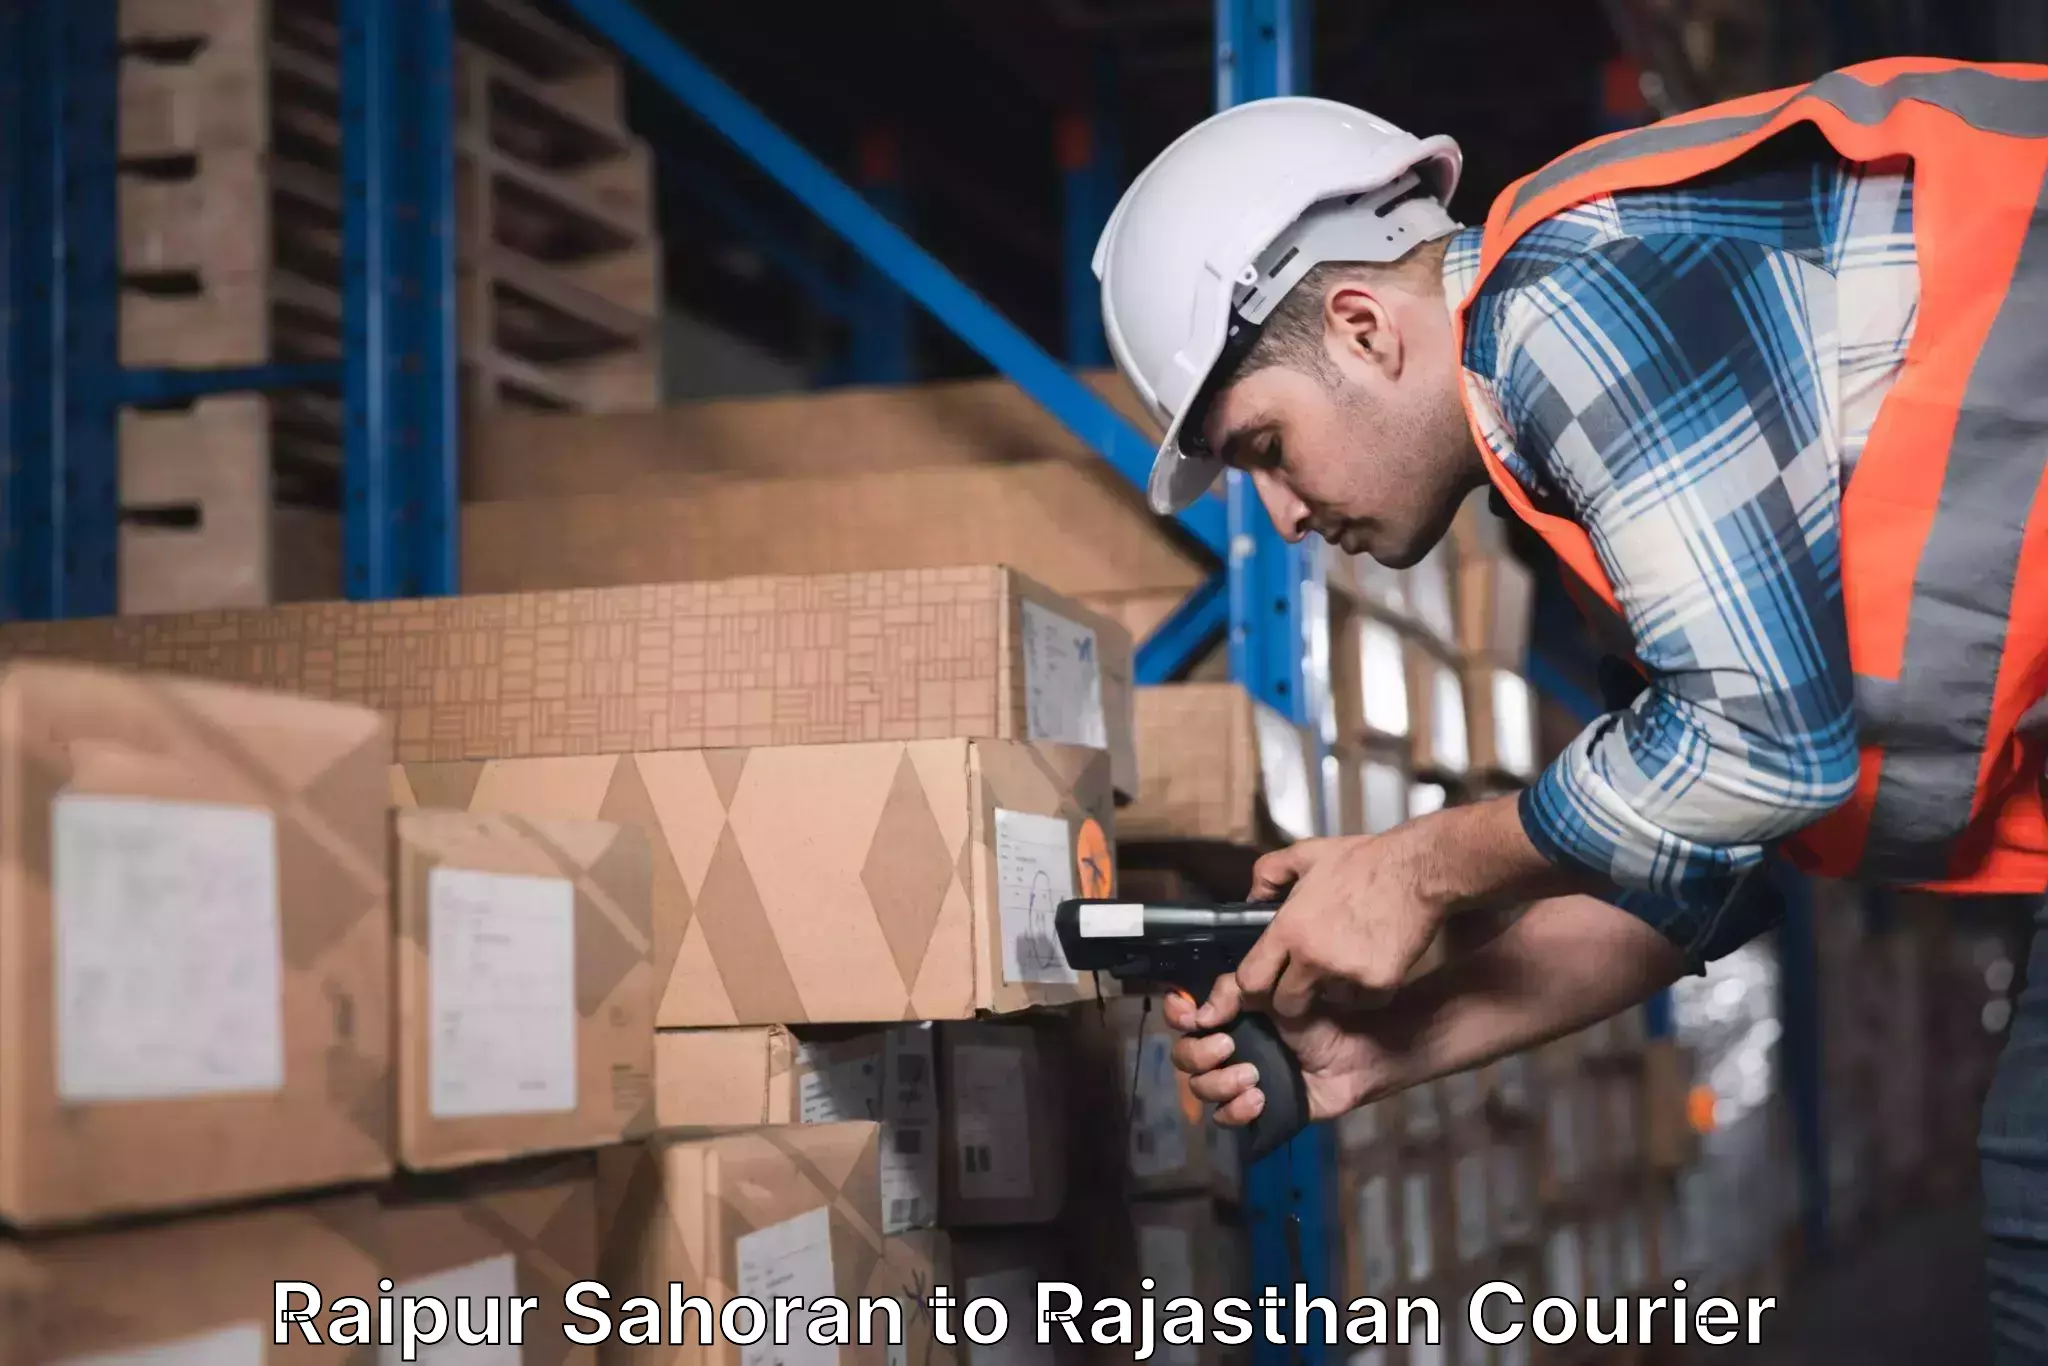 Affordable parcel service Raipur Sahoran to Nimbahera